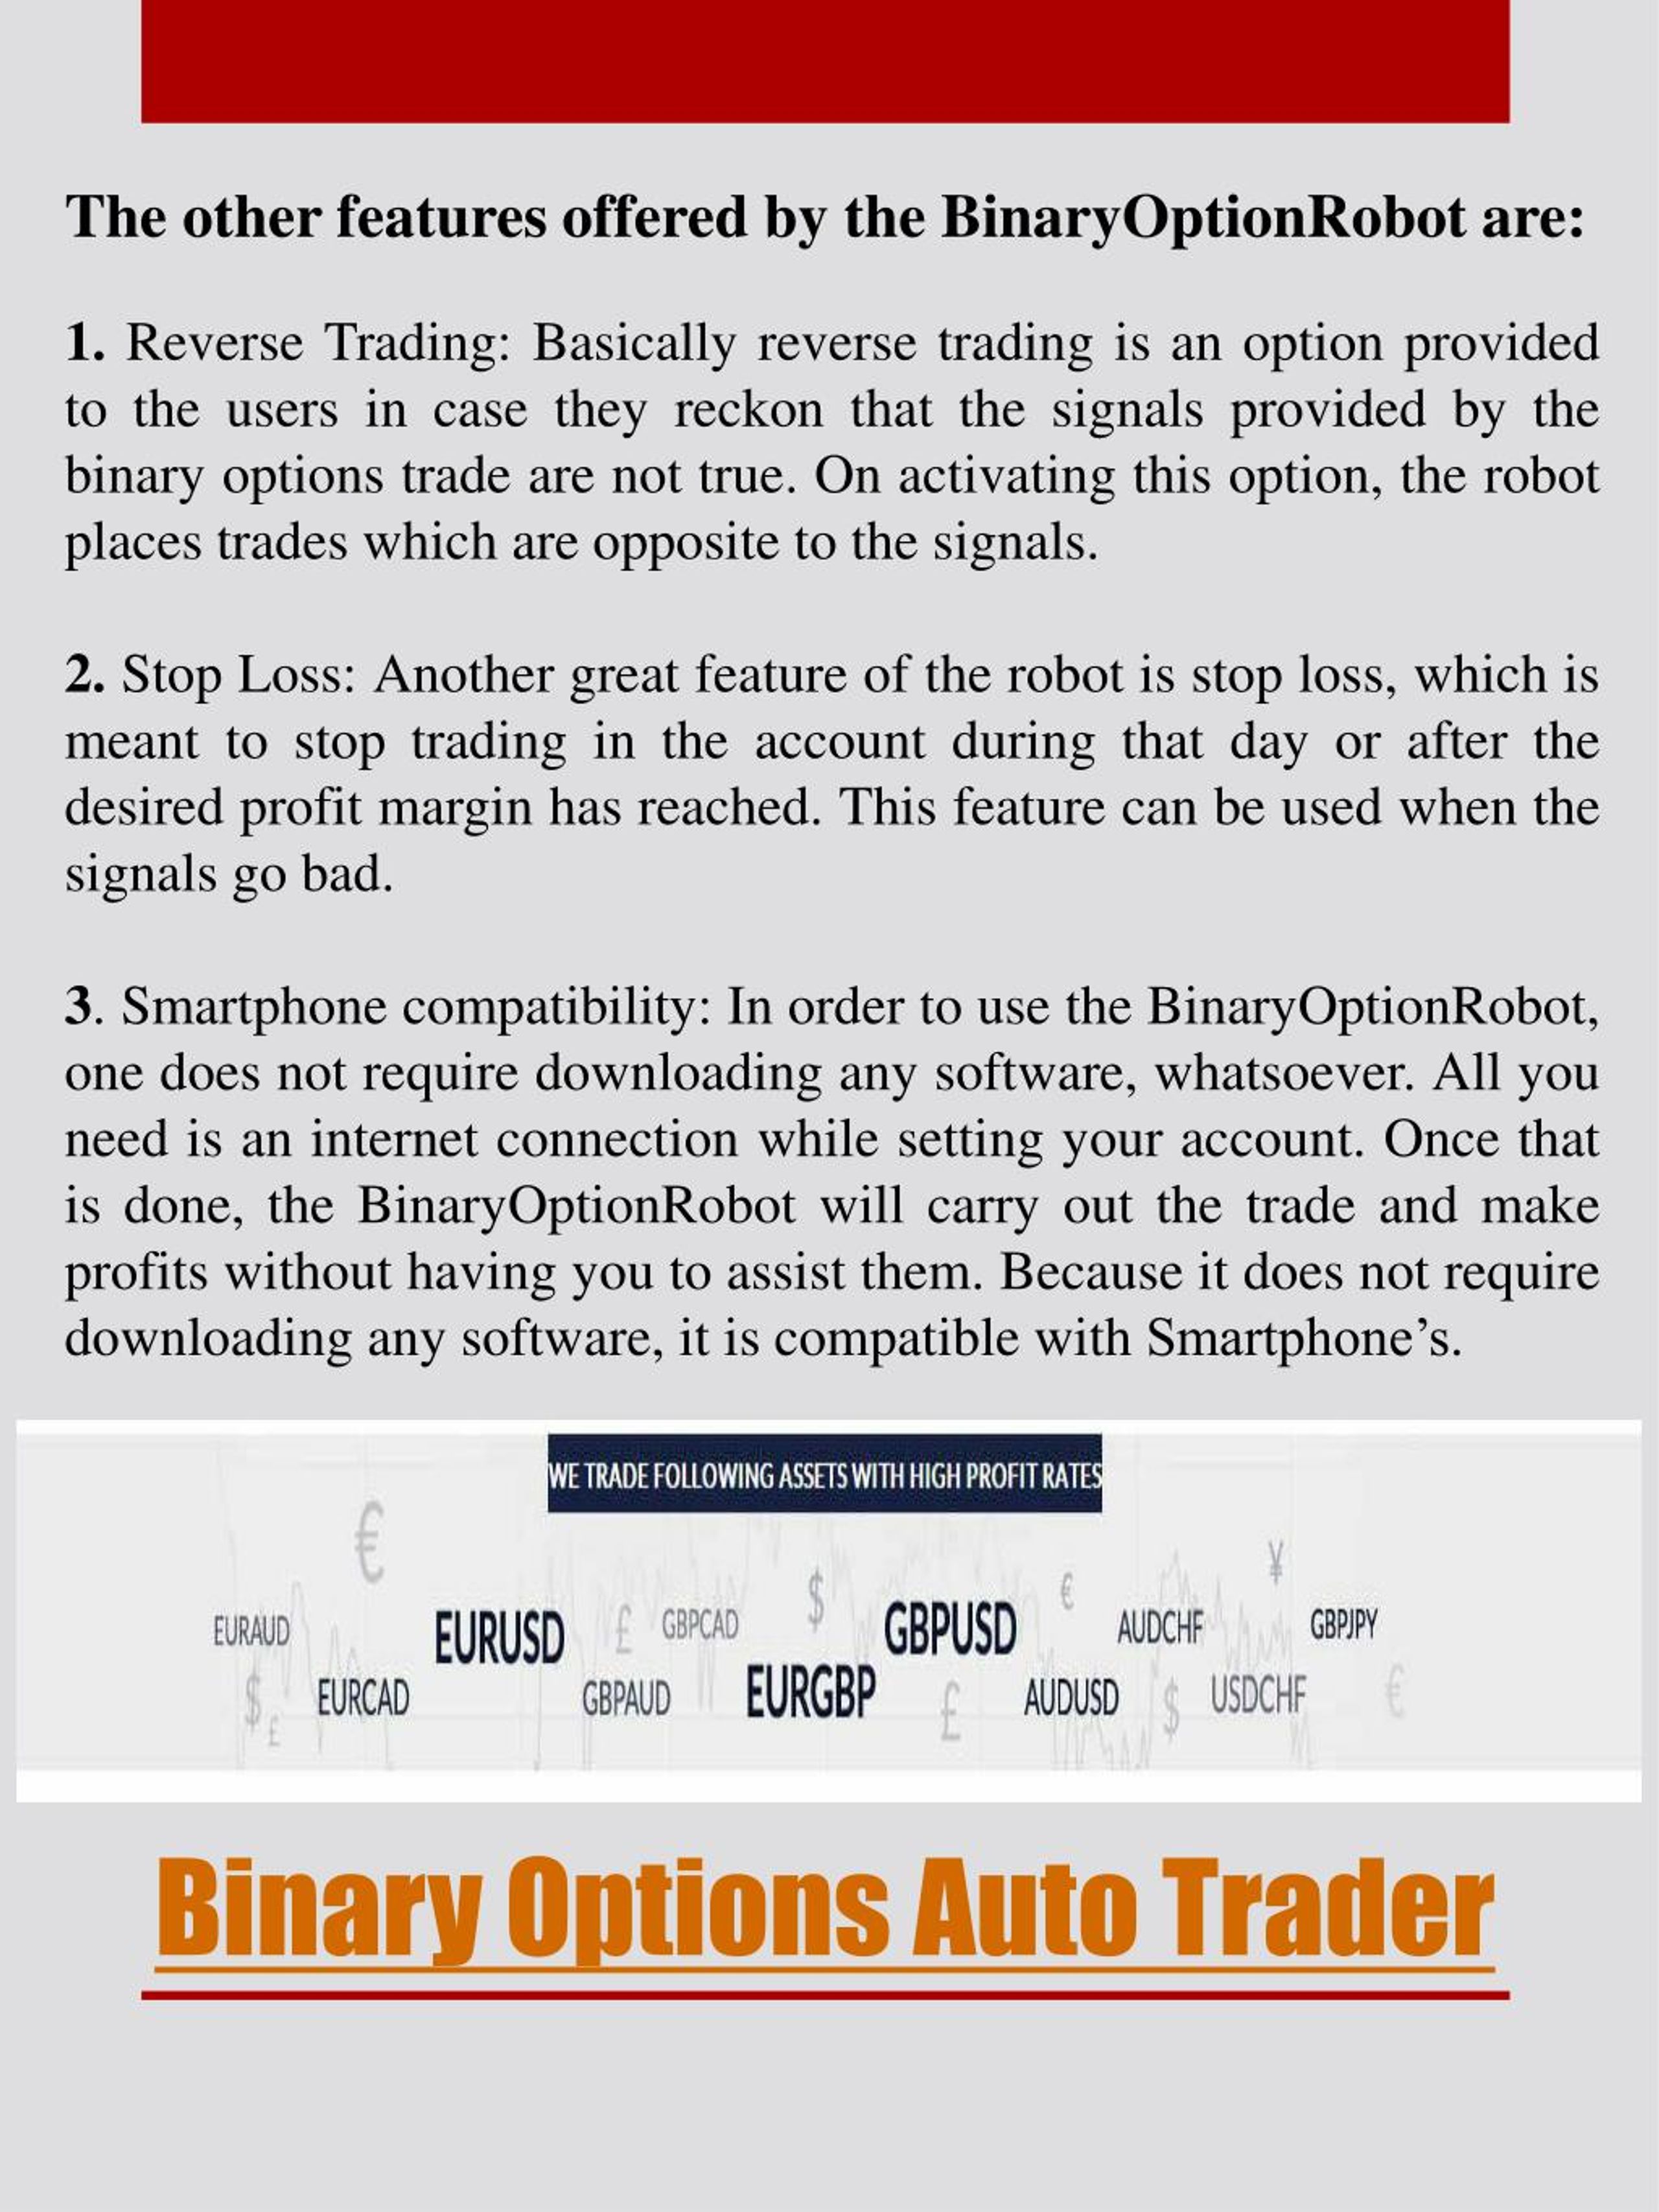 Auto trade binary options